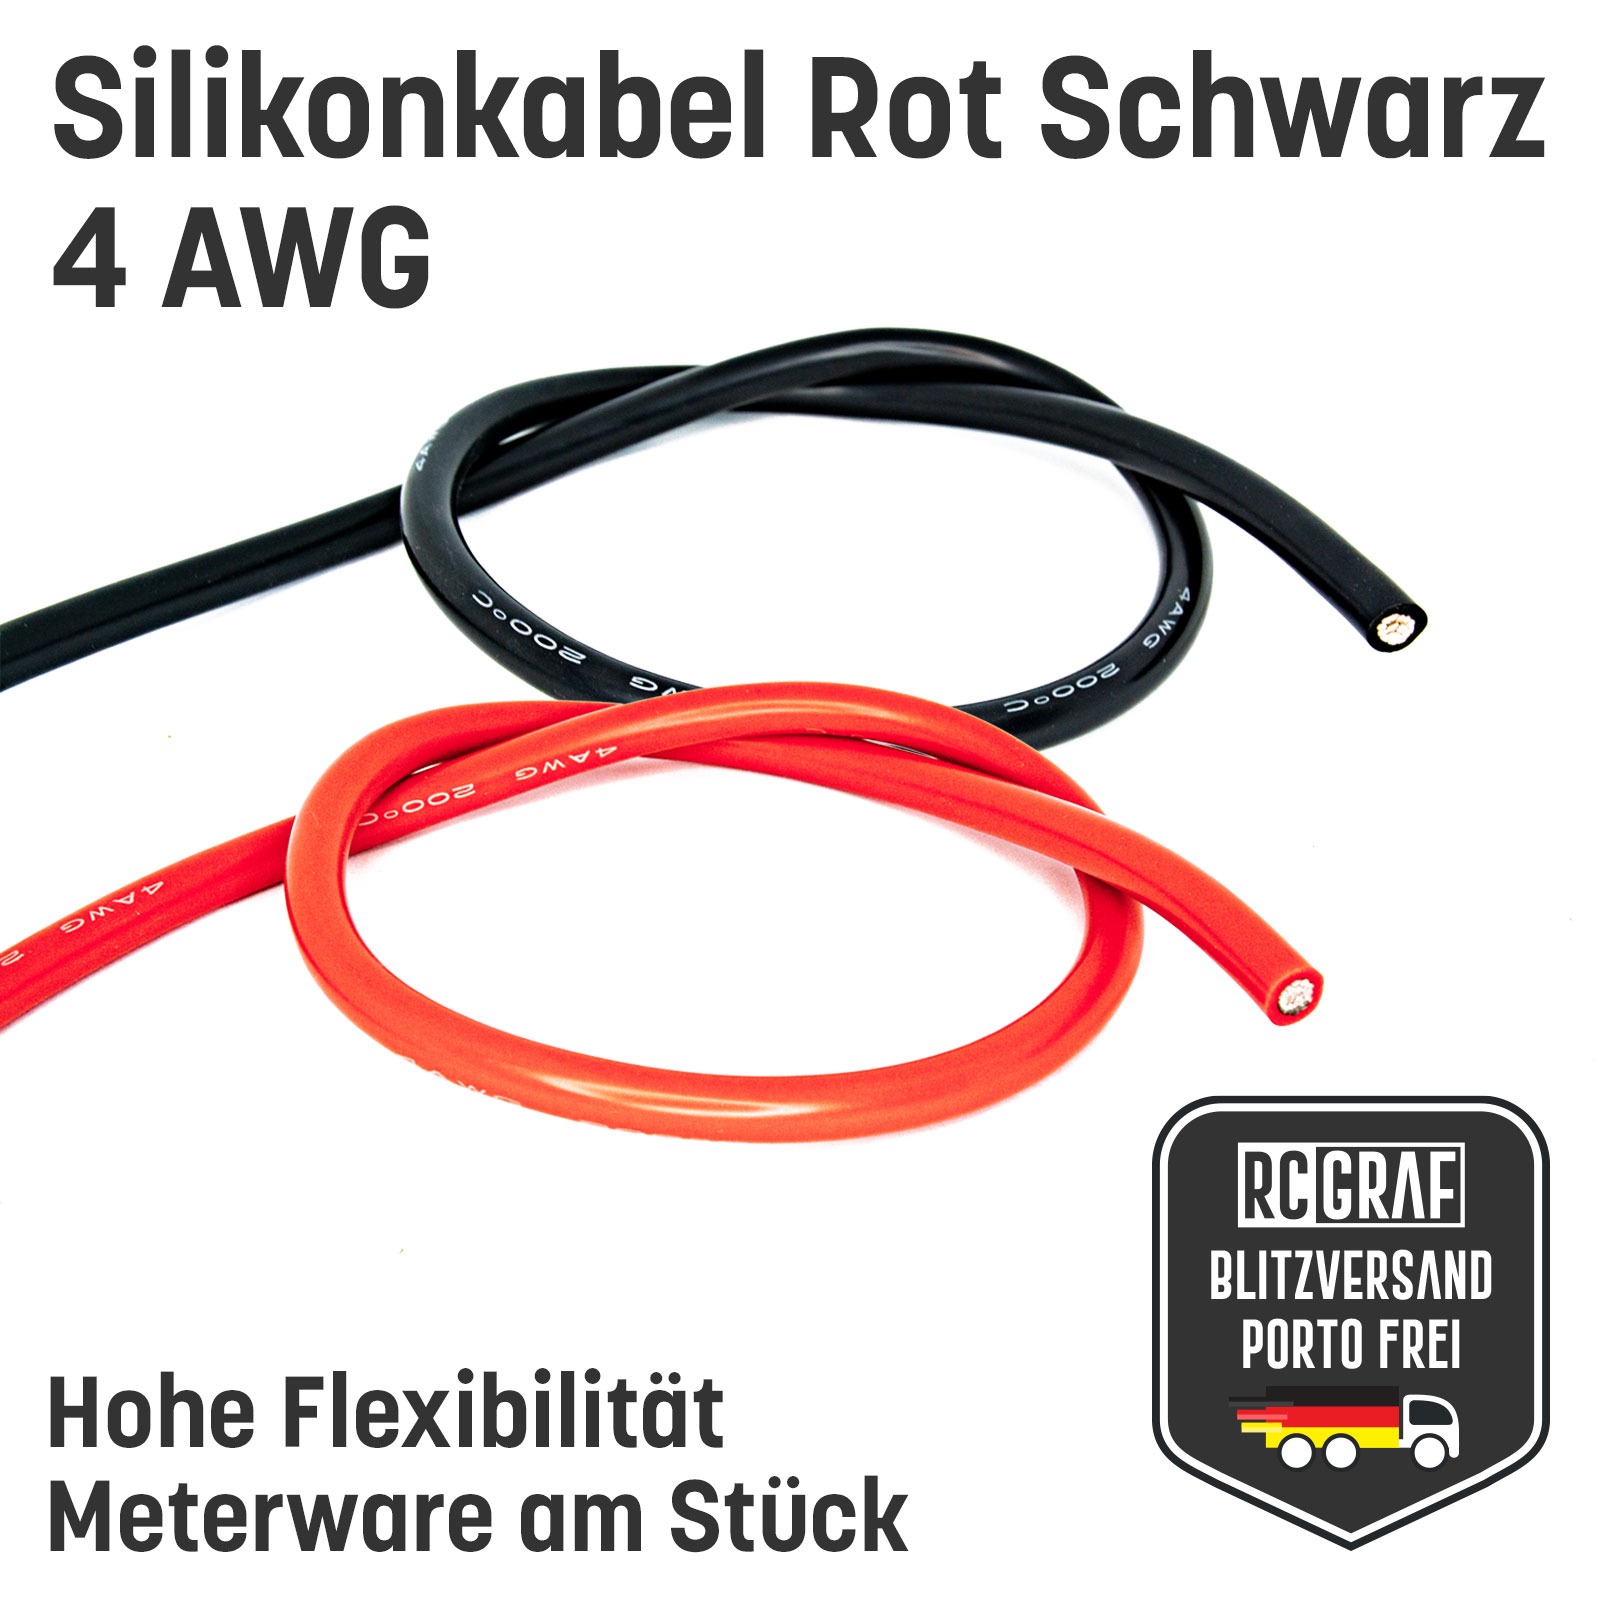 Silikonkabel 4 AWG hochflexibel Rot Schwarz Kupfer RC Kabel